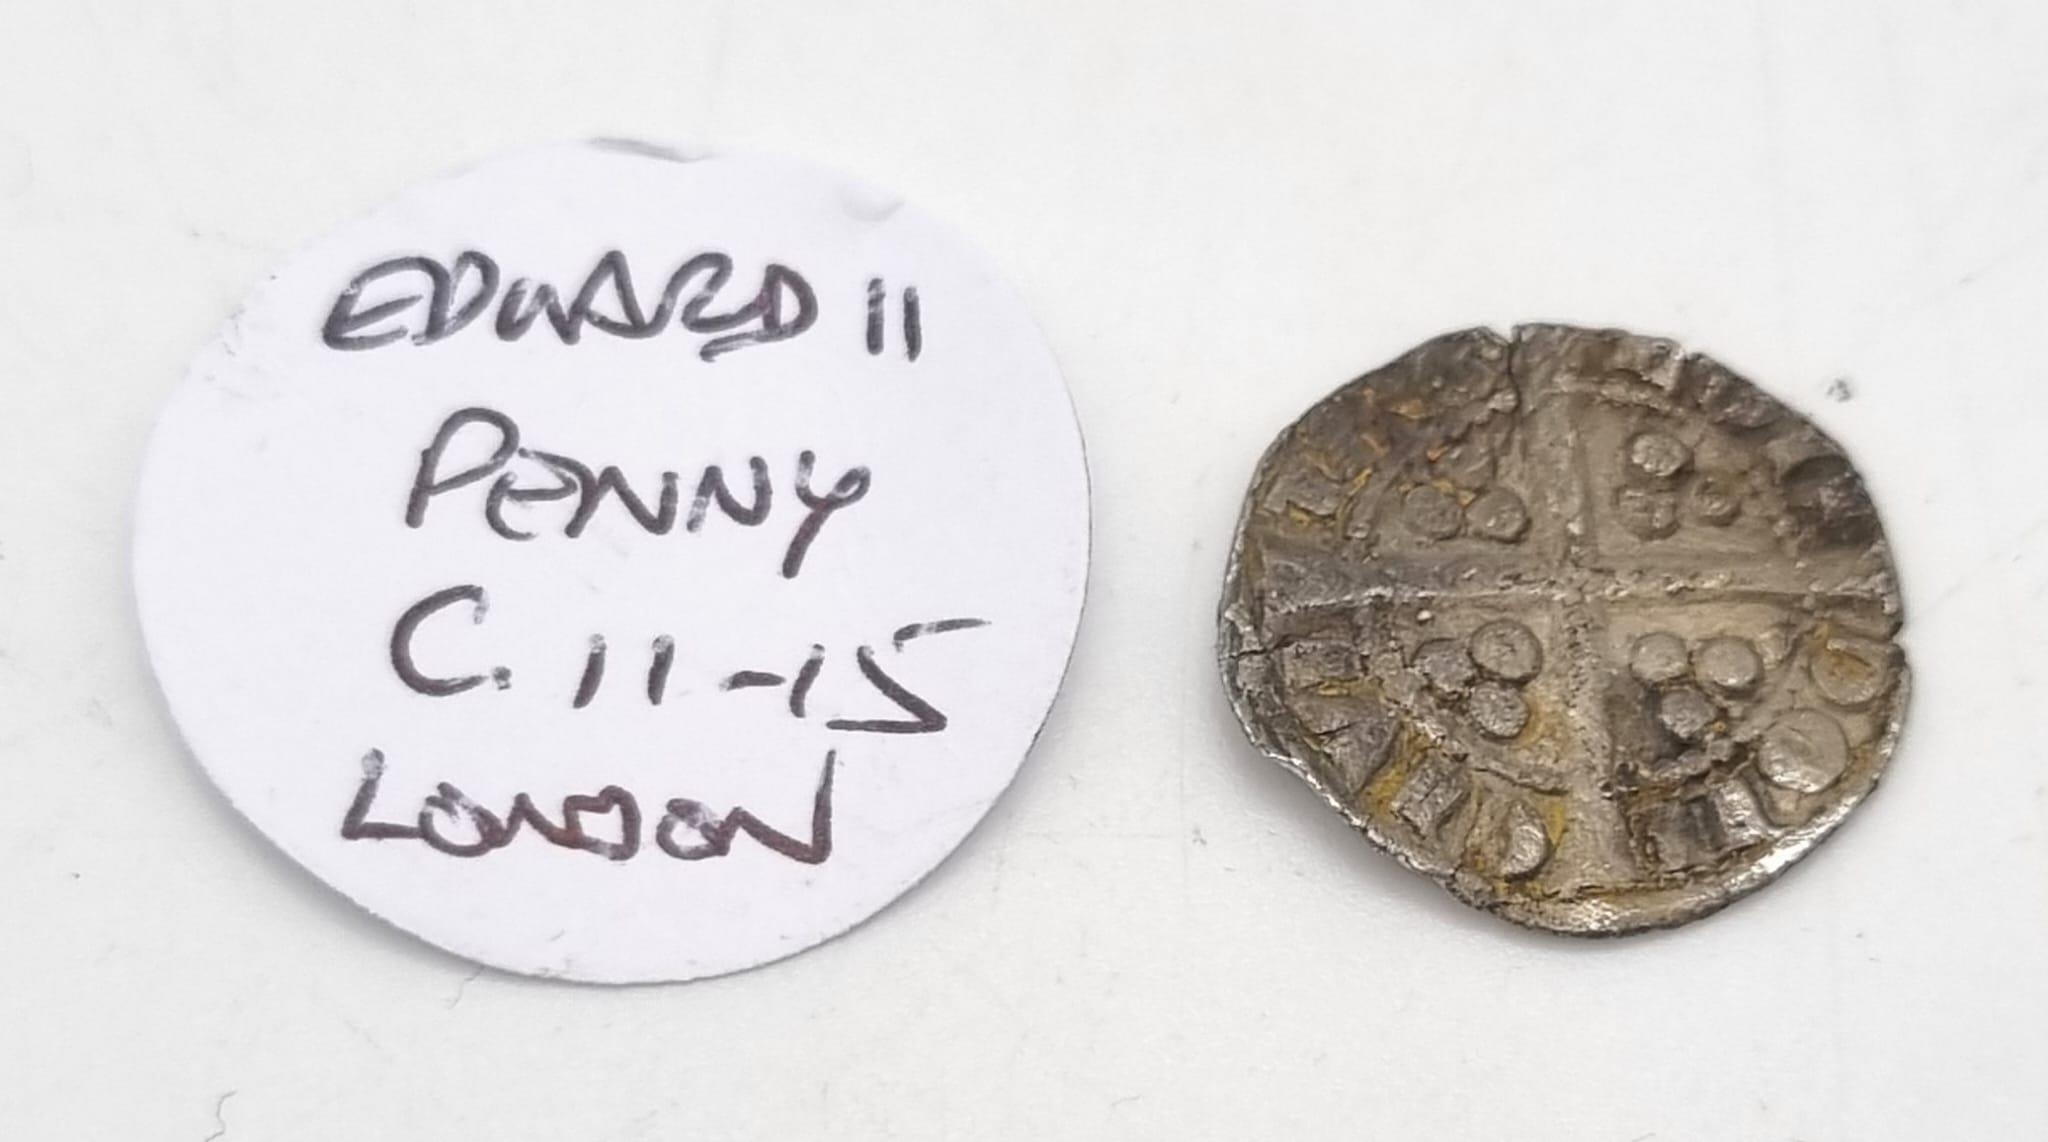 An Edward II Silver Penny, 1455-1463, near fine condition, minted in London. Class 11-15.